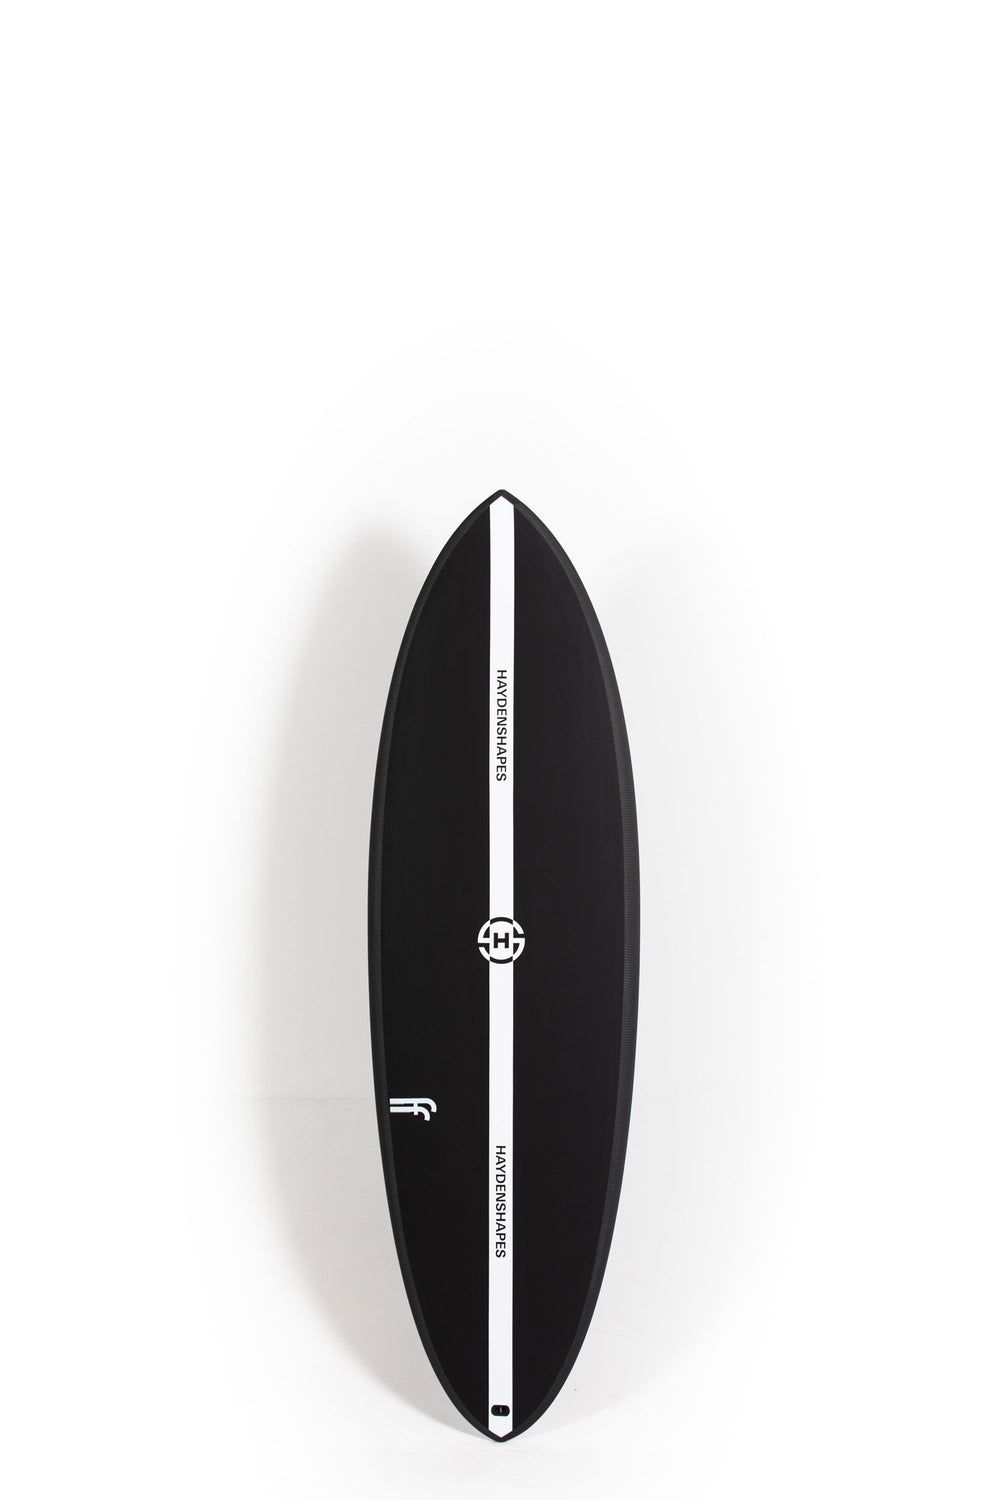 Pukas Surf Shop - HAYDEN SHAPES SURFBOARDS - HYPTO KRIPTO 5'11